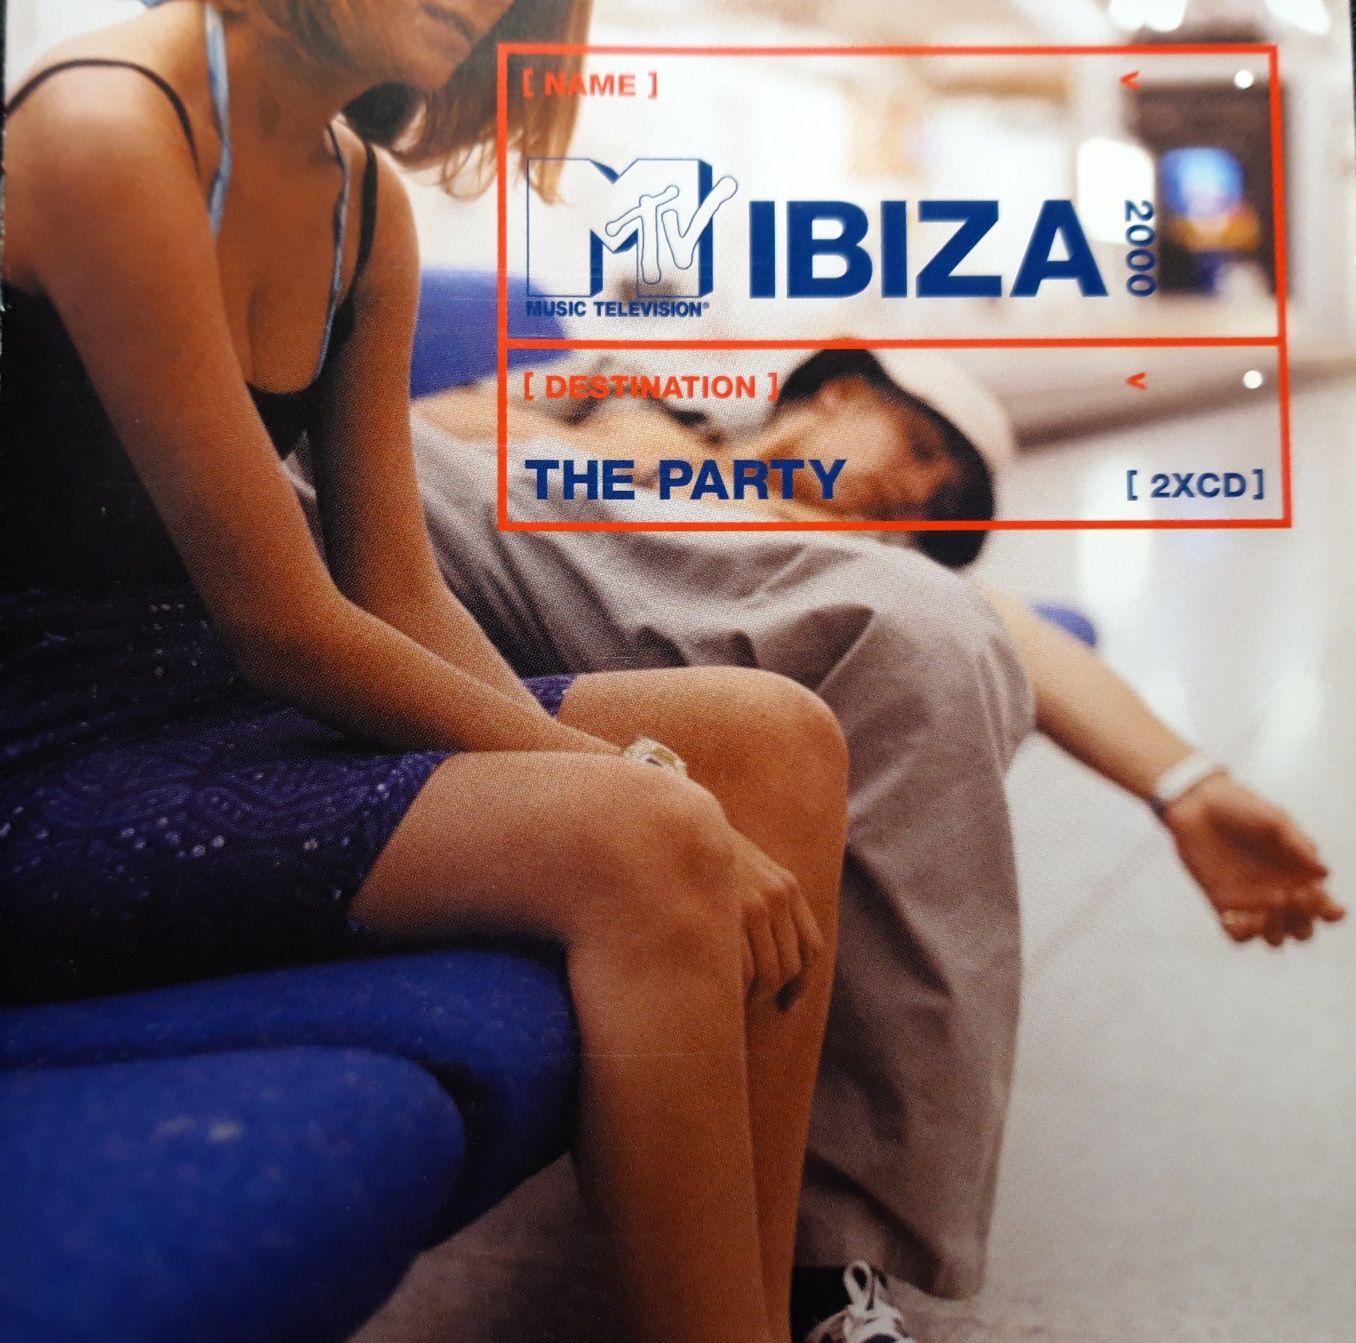 MTV Ibiza 2000 - The Party (2xCD, 2000)